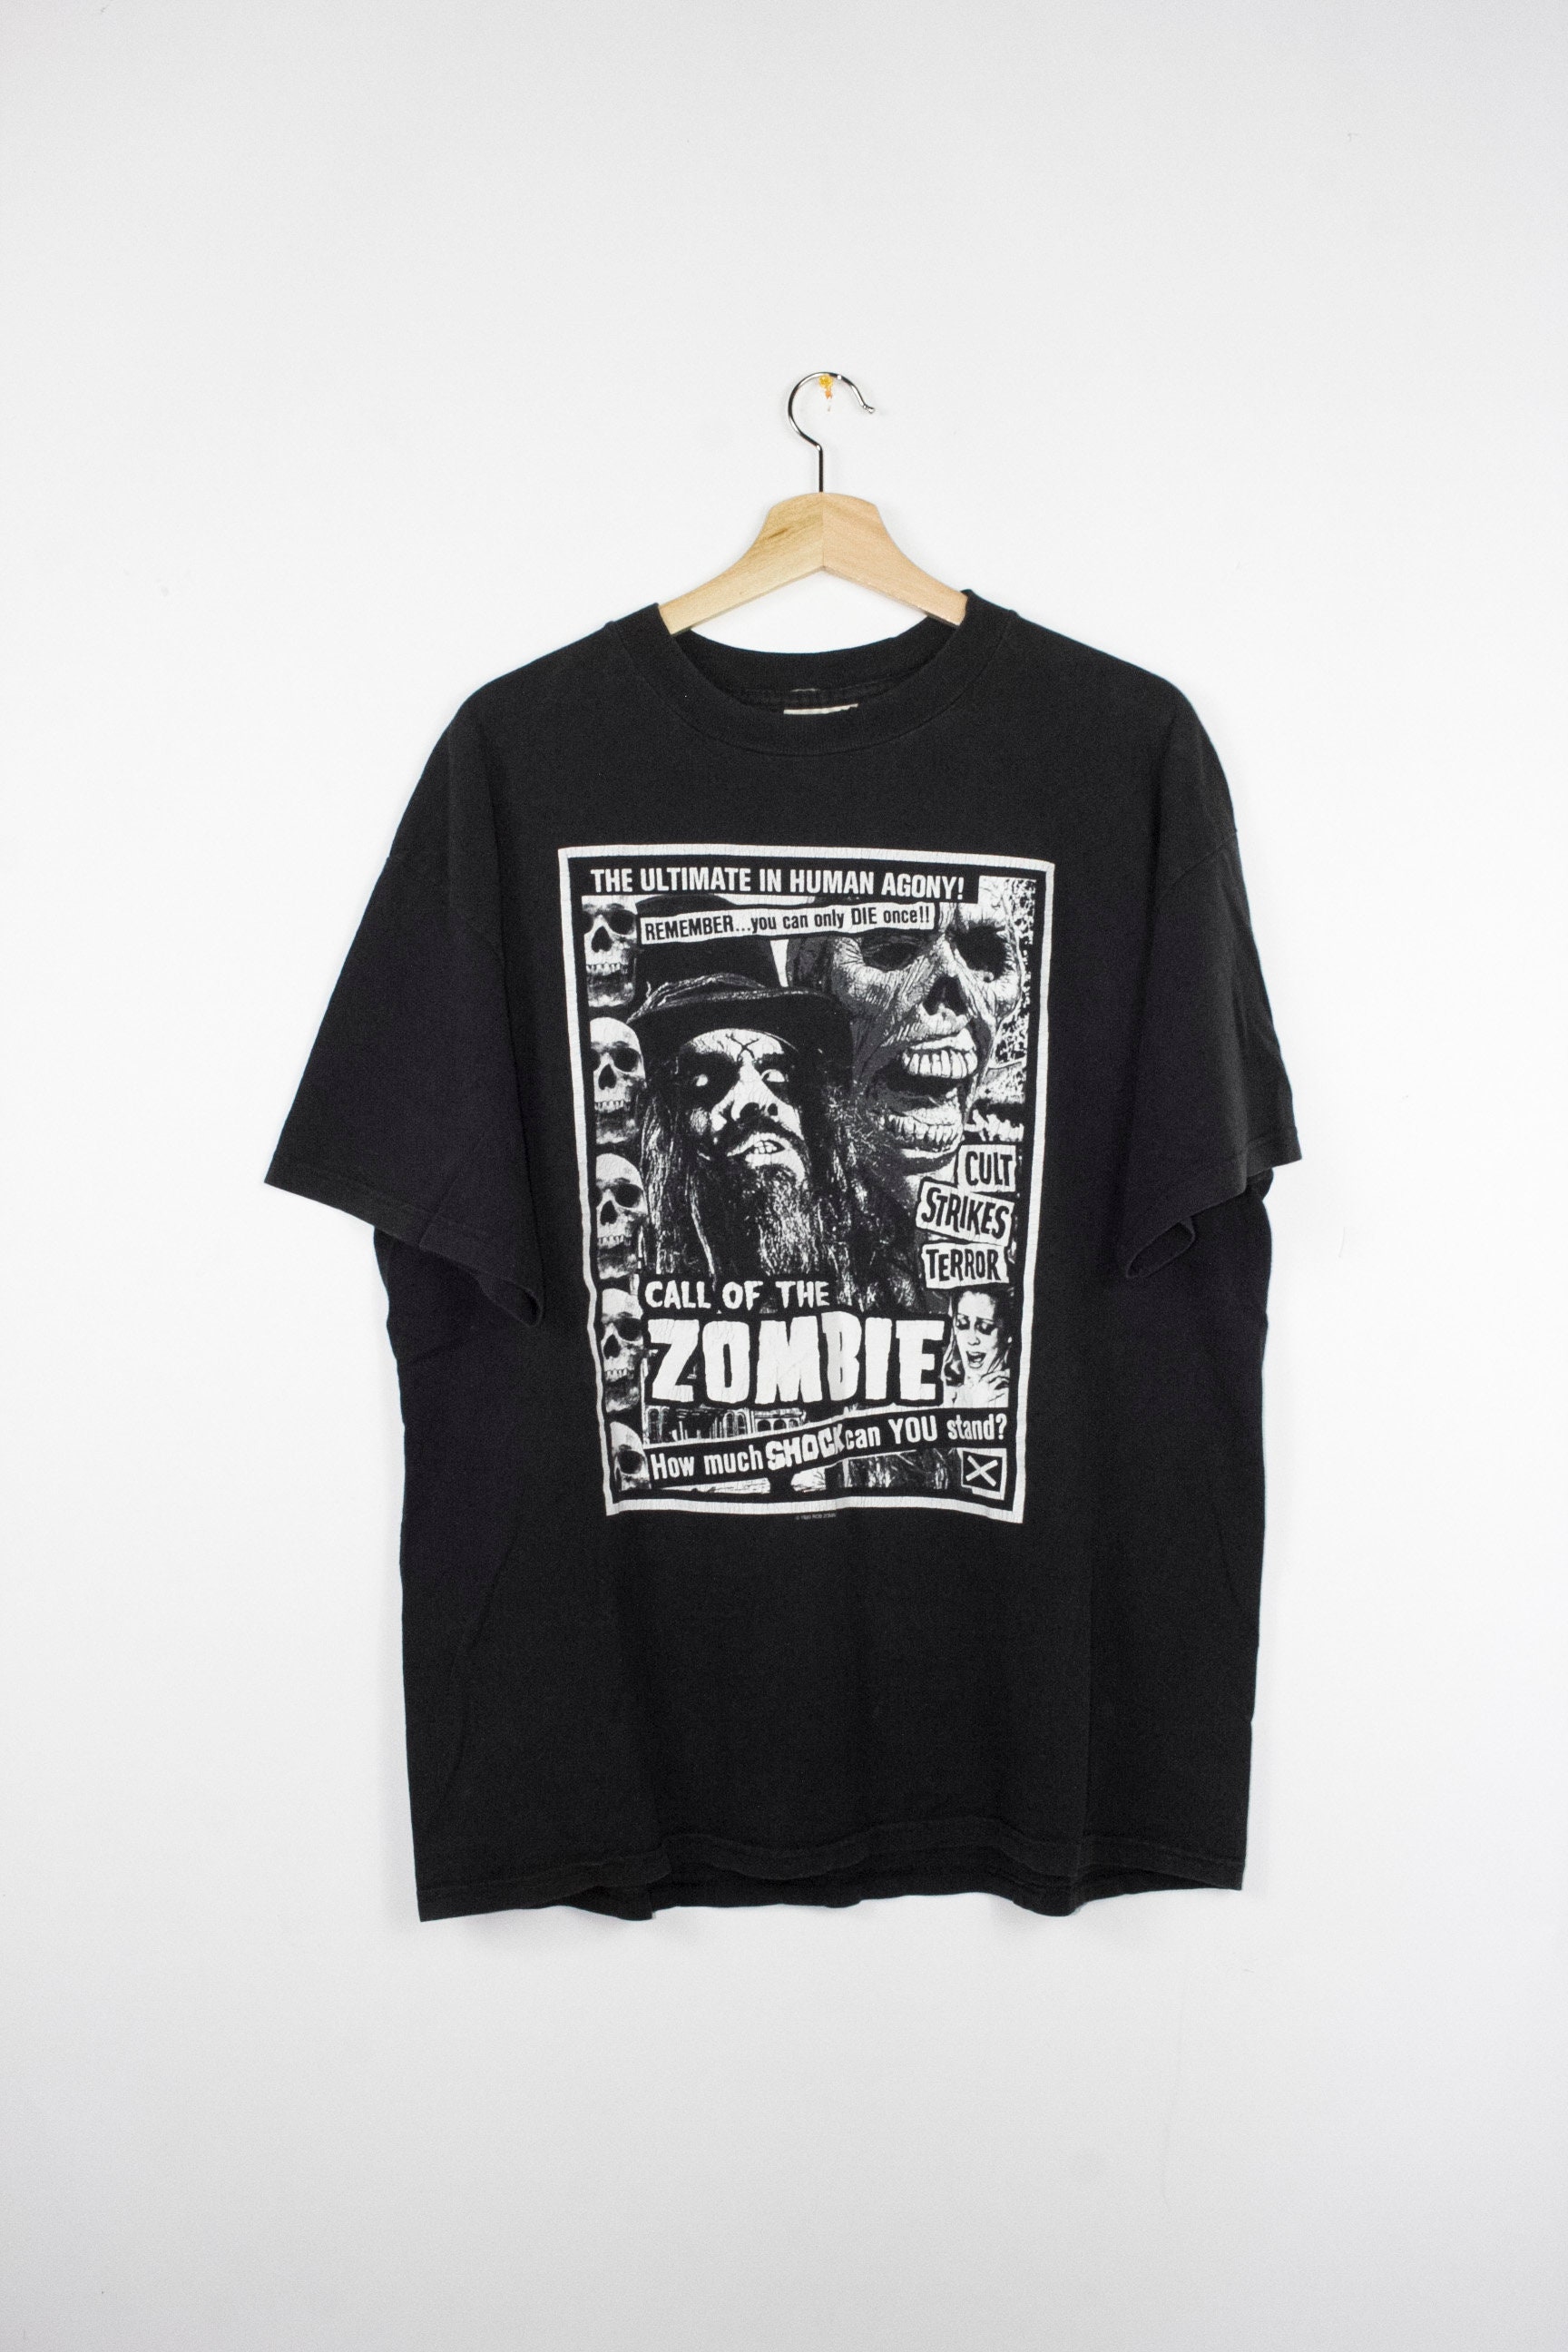 ROB ZOMBIE Living Dead Girl t shirt vintage 90s winterland | Etsy